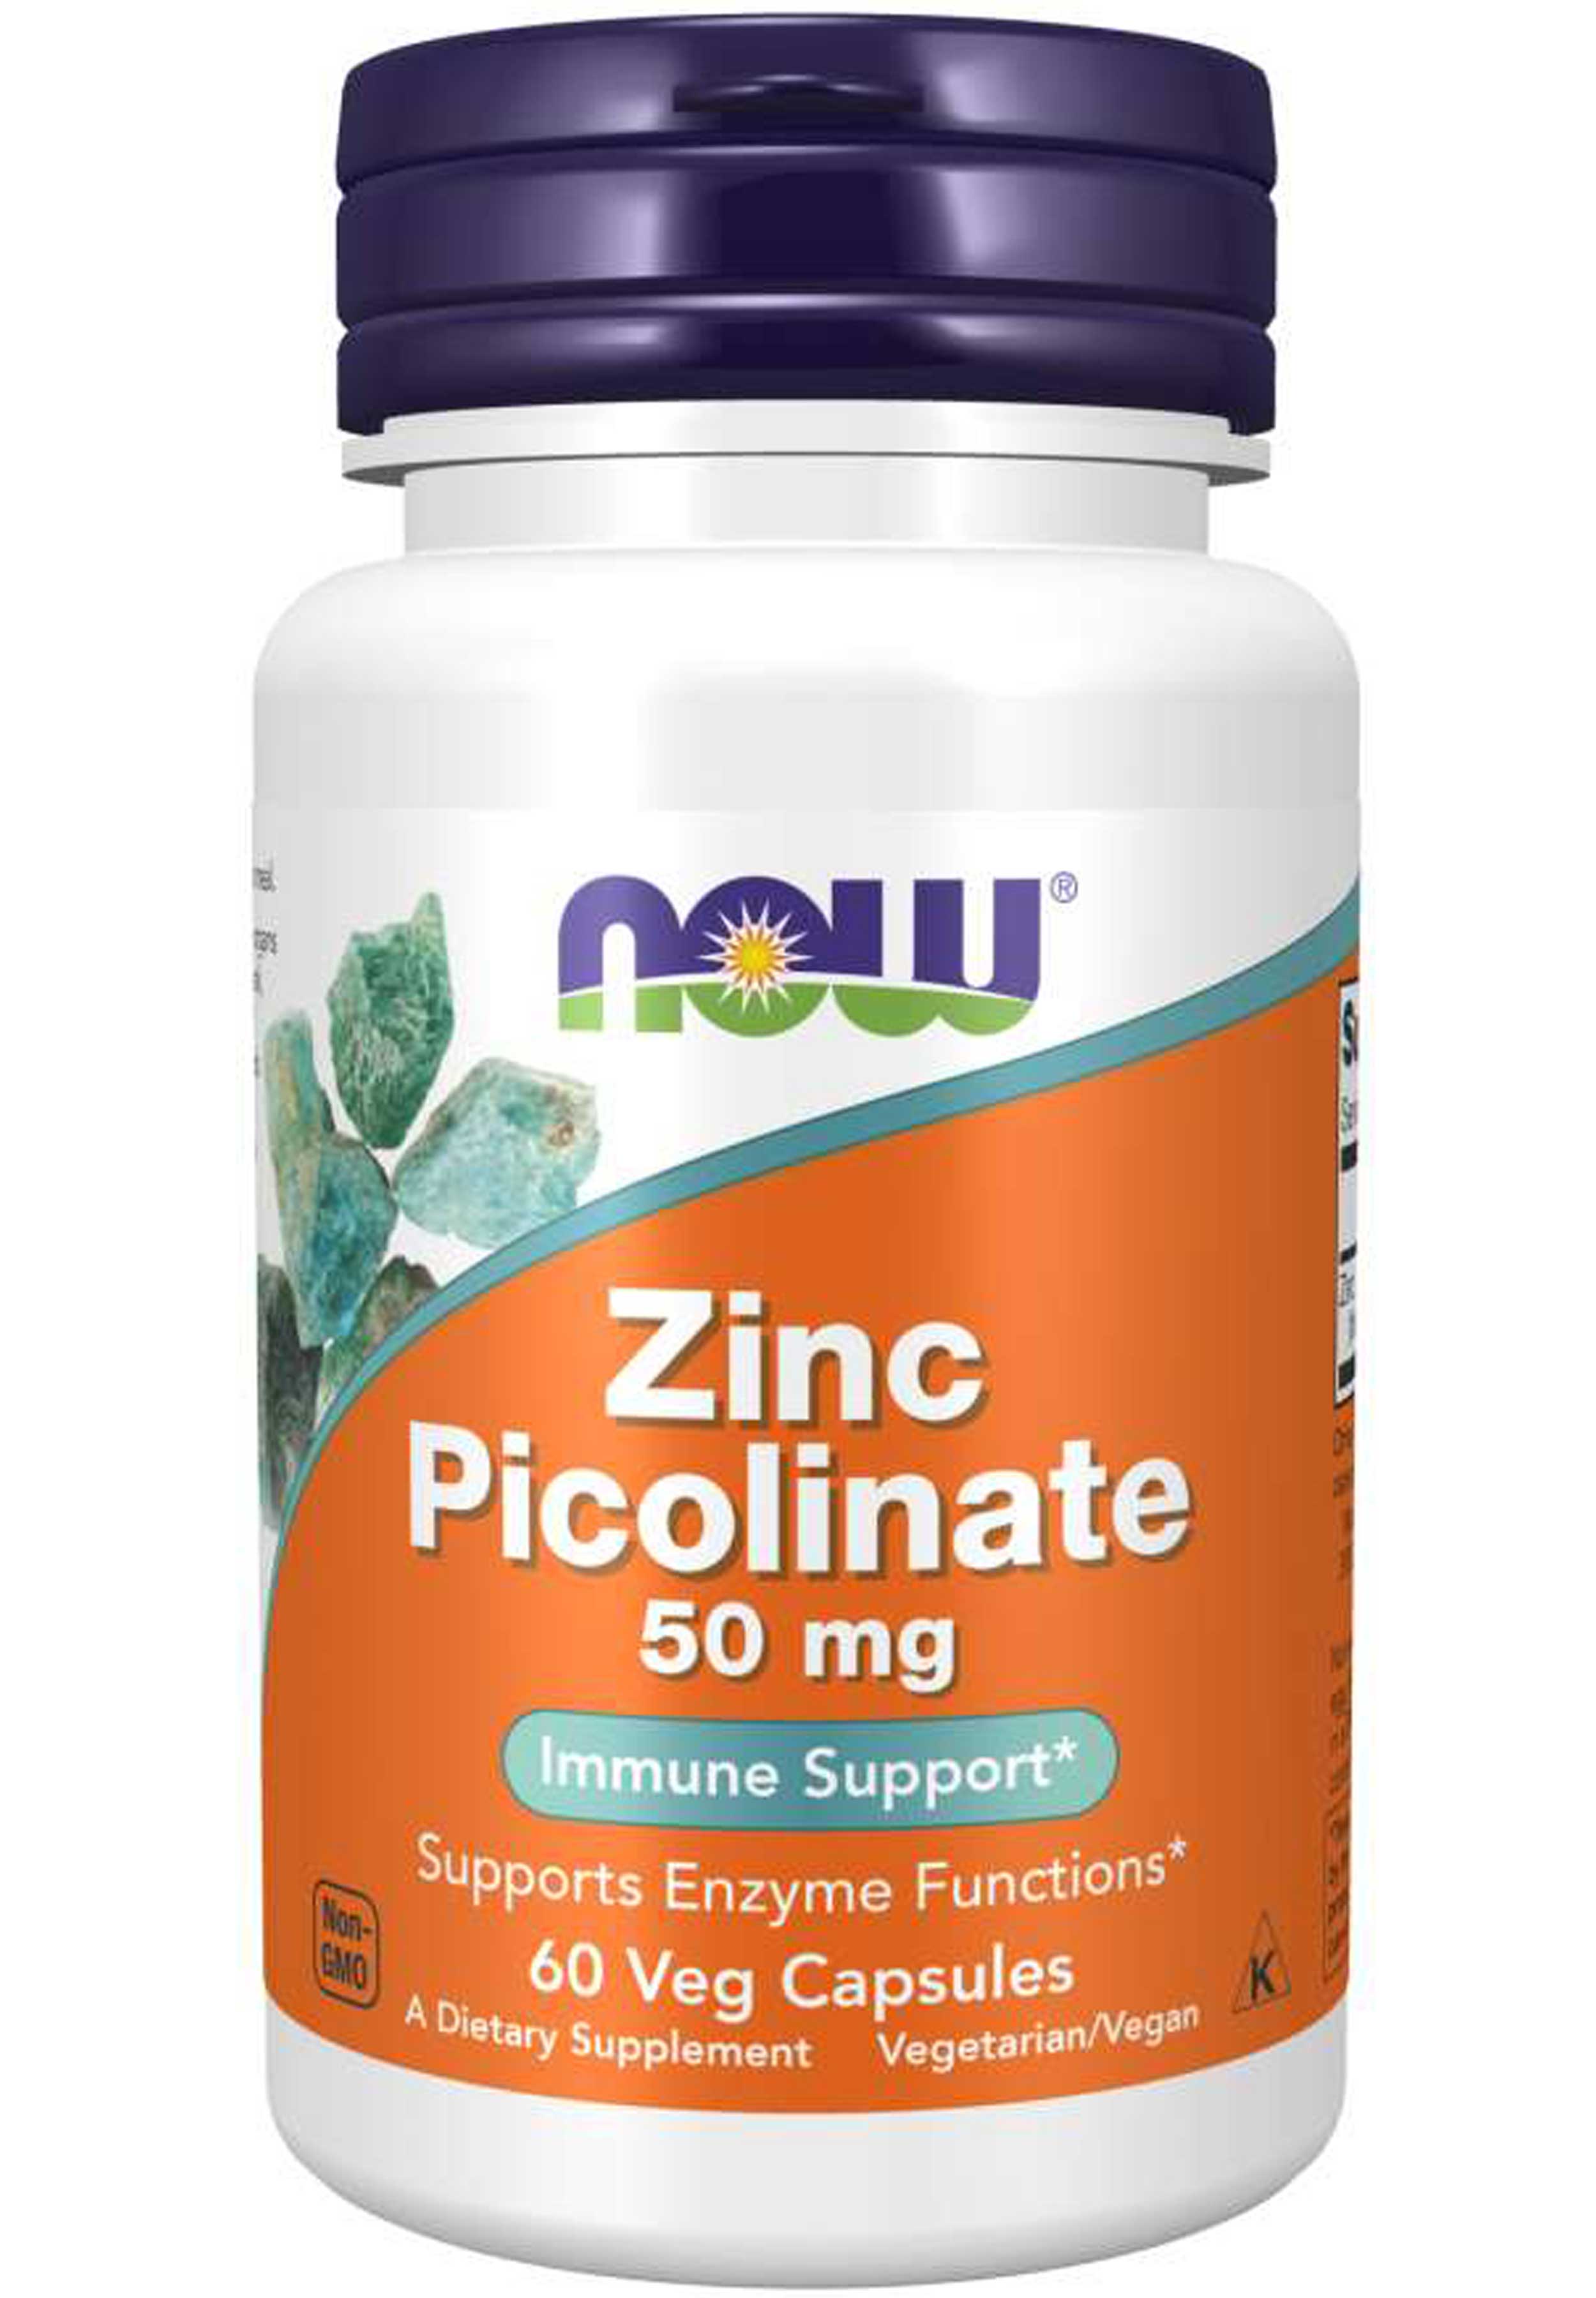 NOW Zinc Picolinate 50 mg